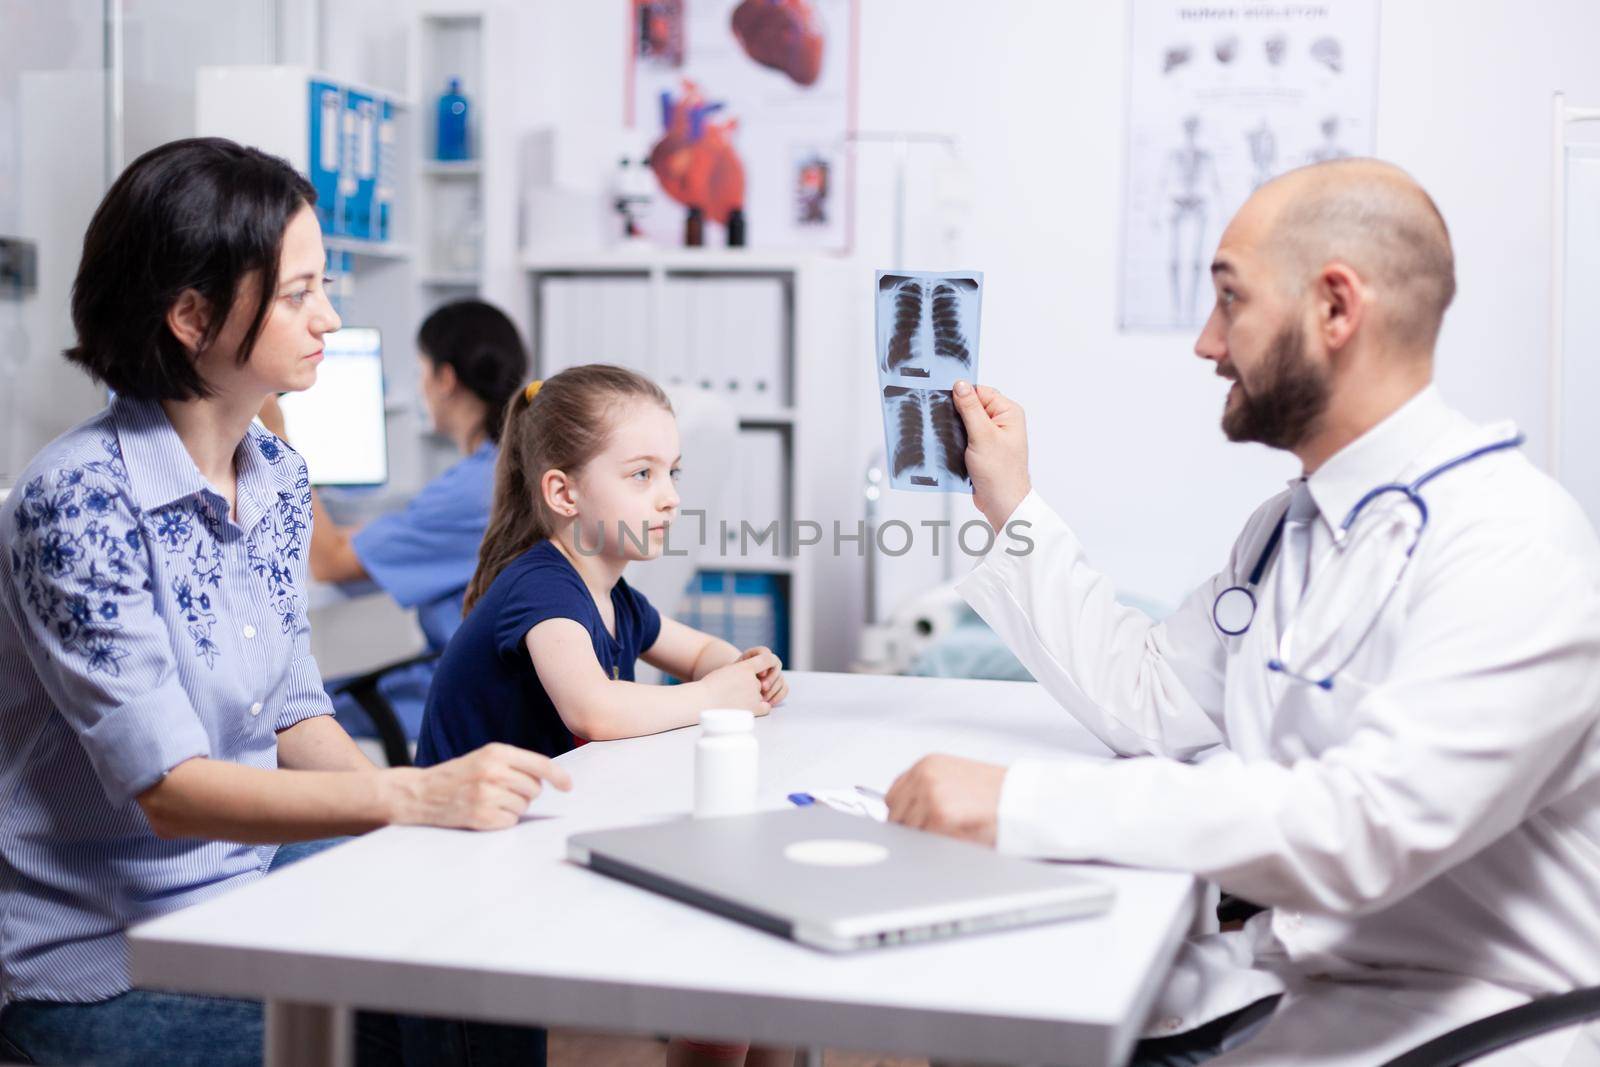 Pediatrician examining radiography by DCStudio